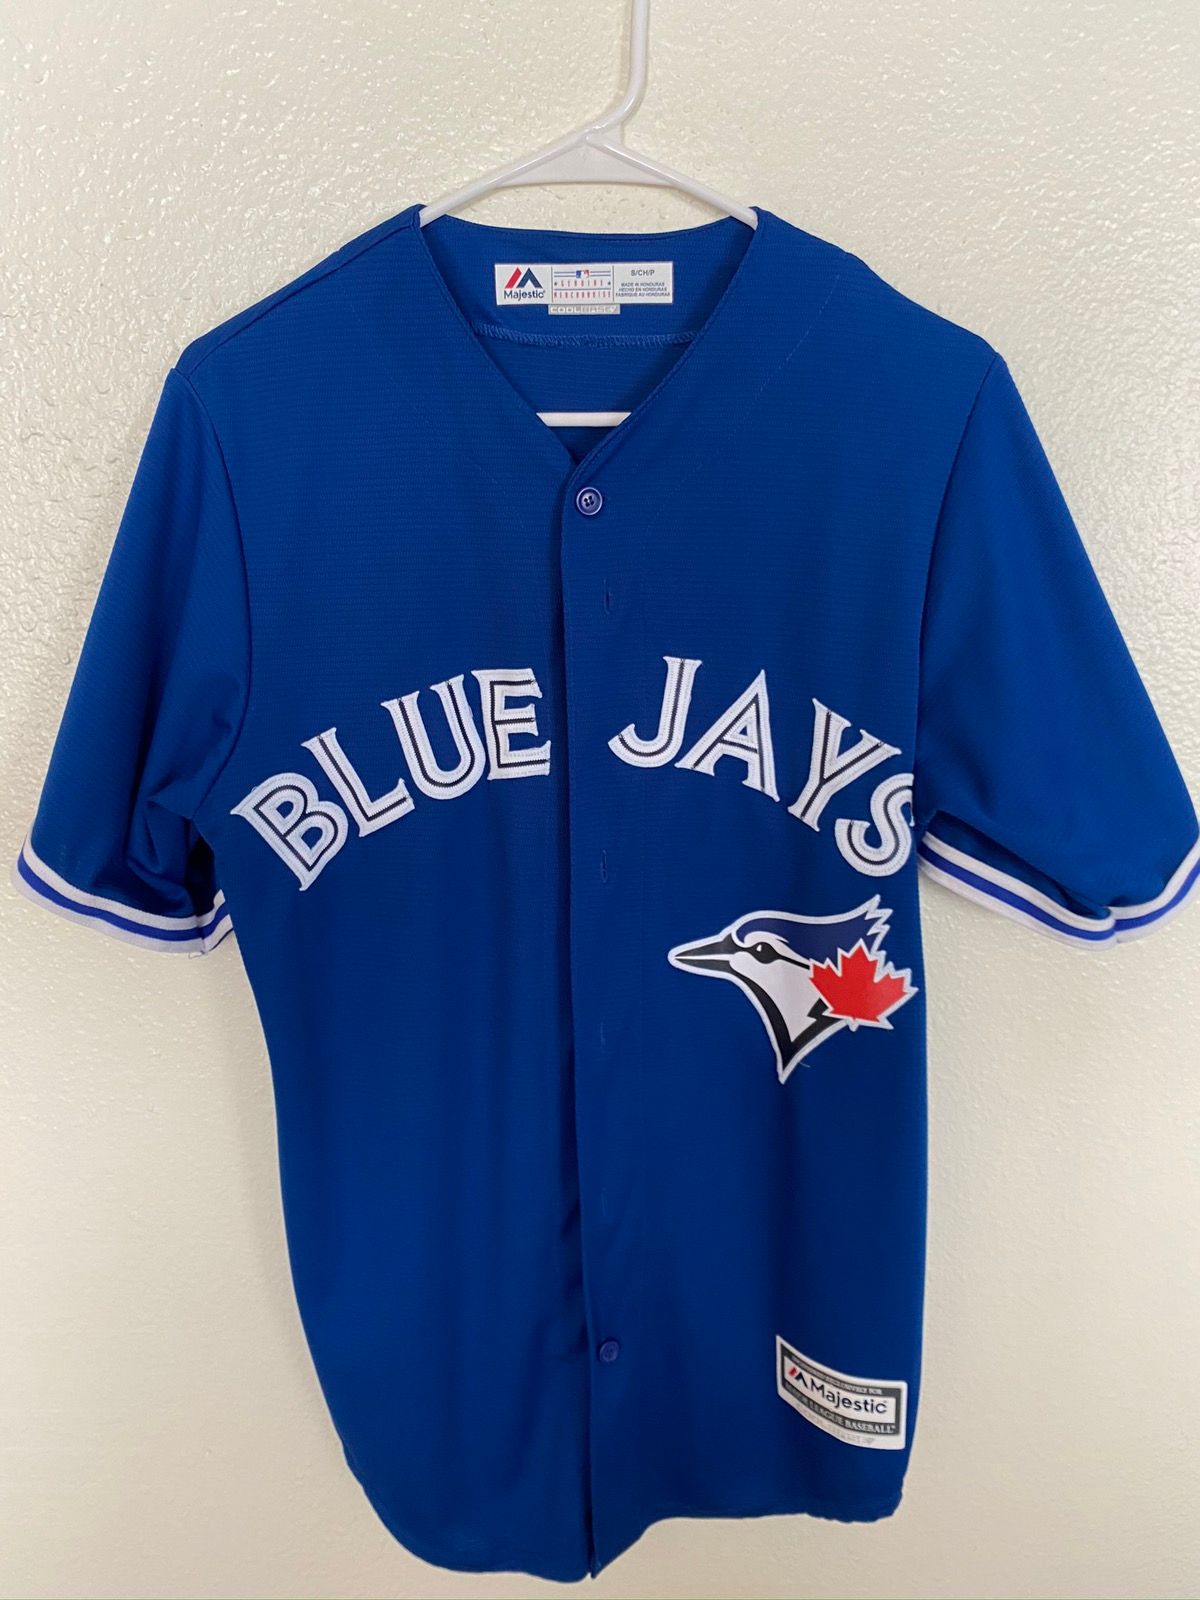 Majestic Blue jays MLB jersey Size US S / EU 44-46 / 1 - 1 Preview